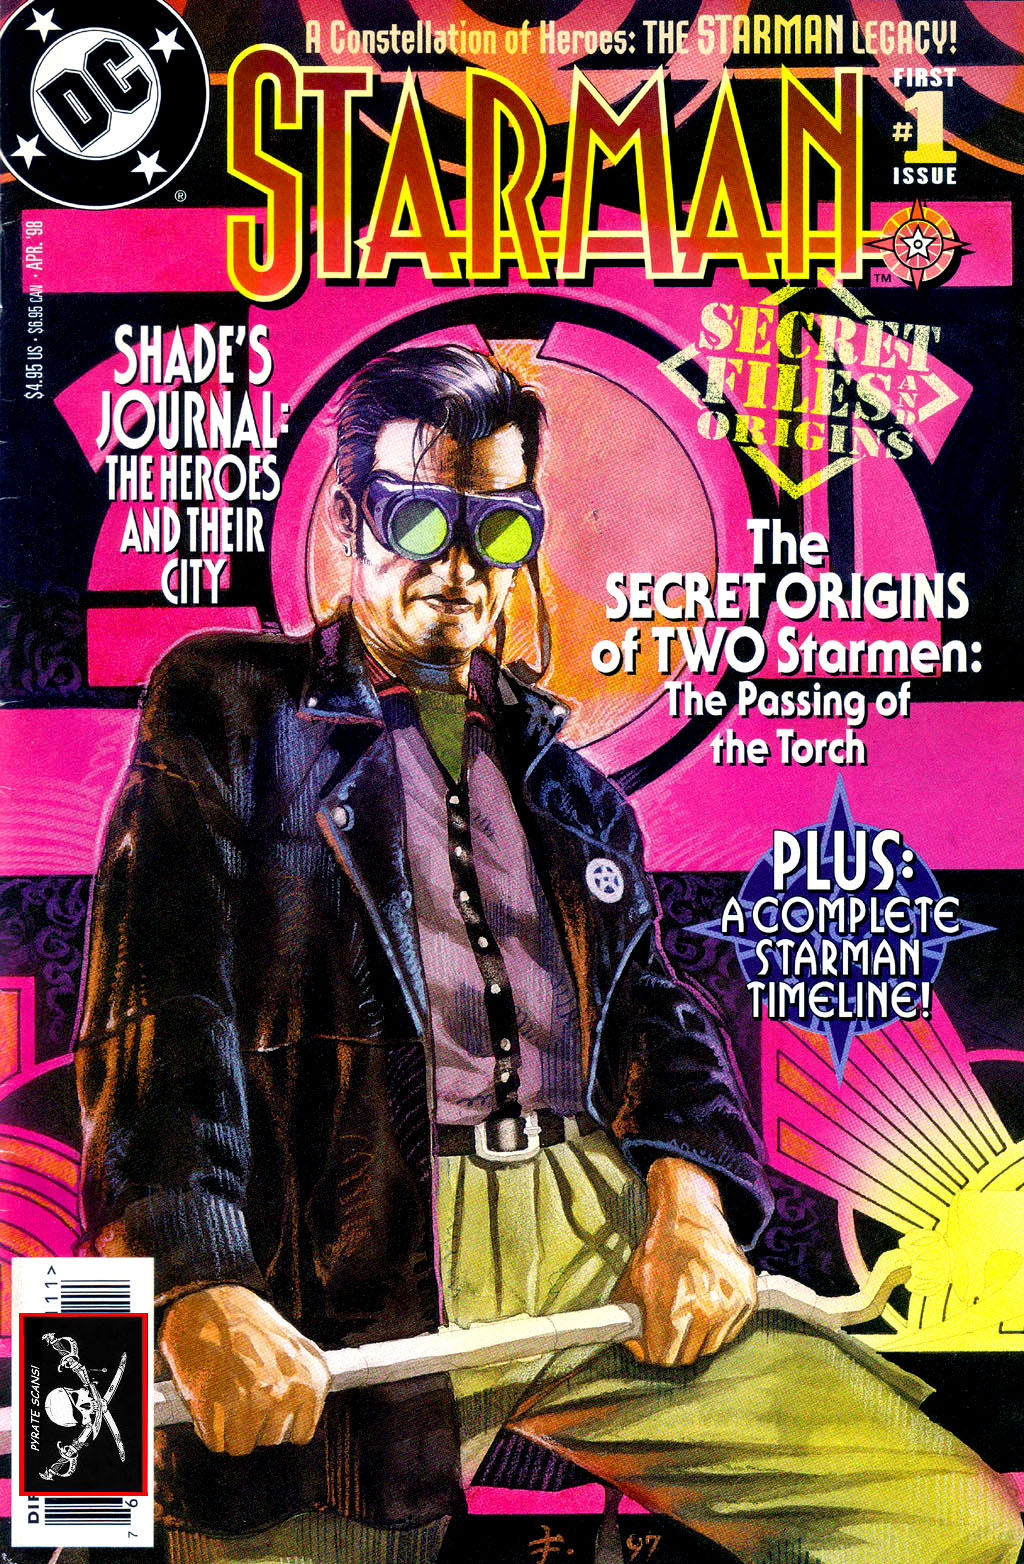 Read online Starman Secret Files comic -  Issue # Full - 1